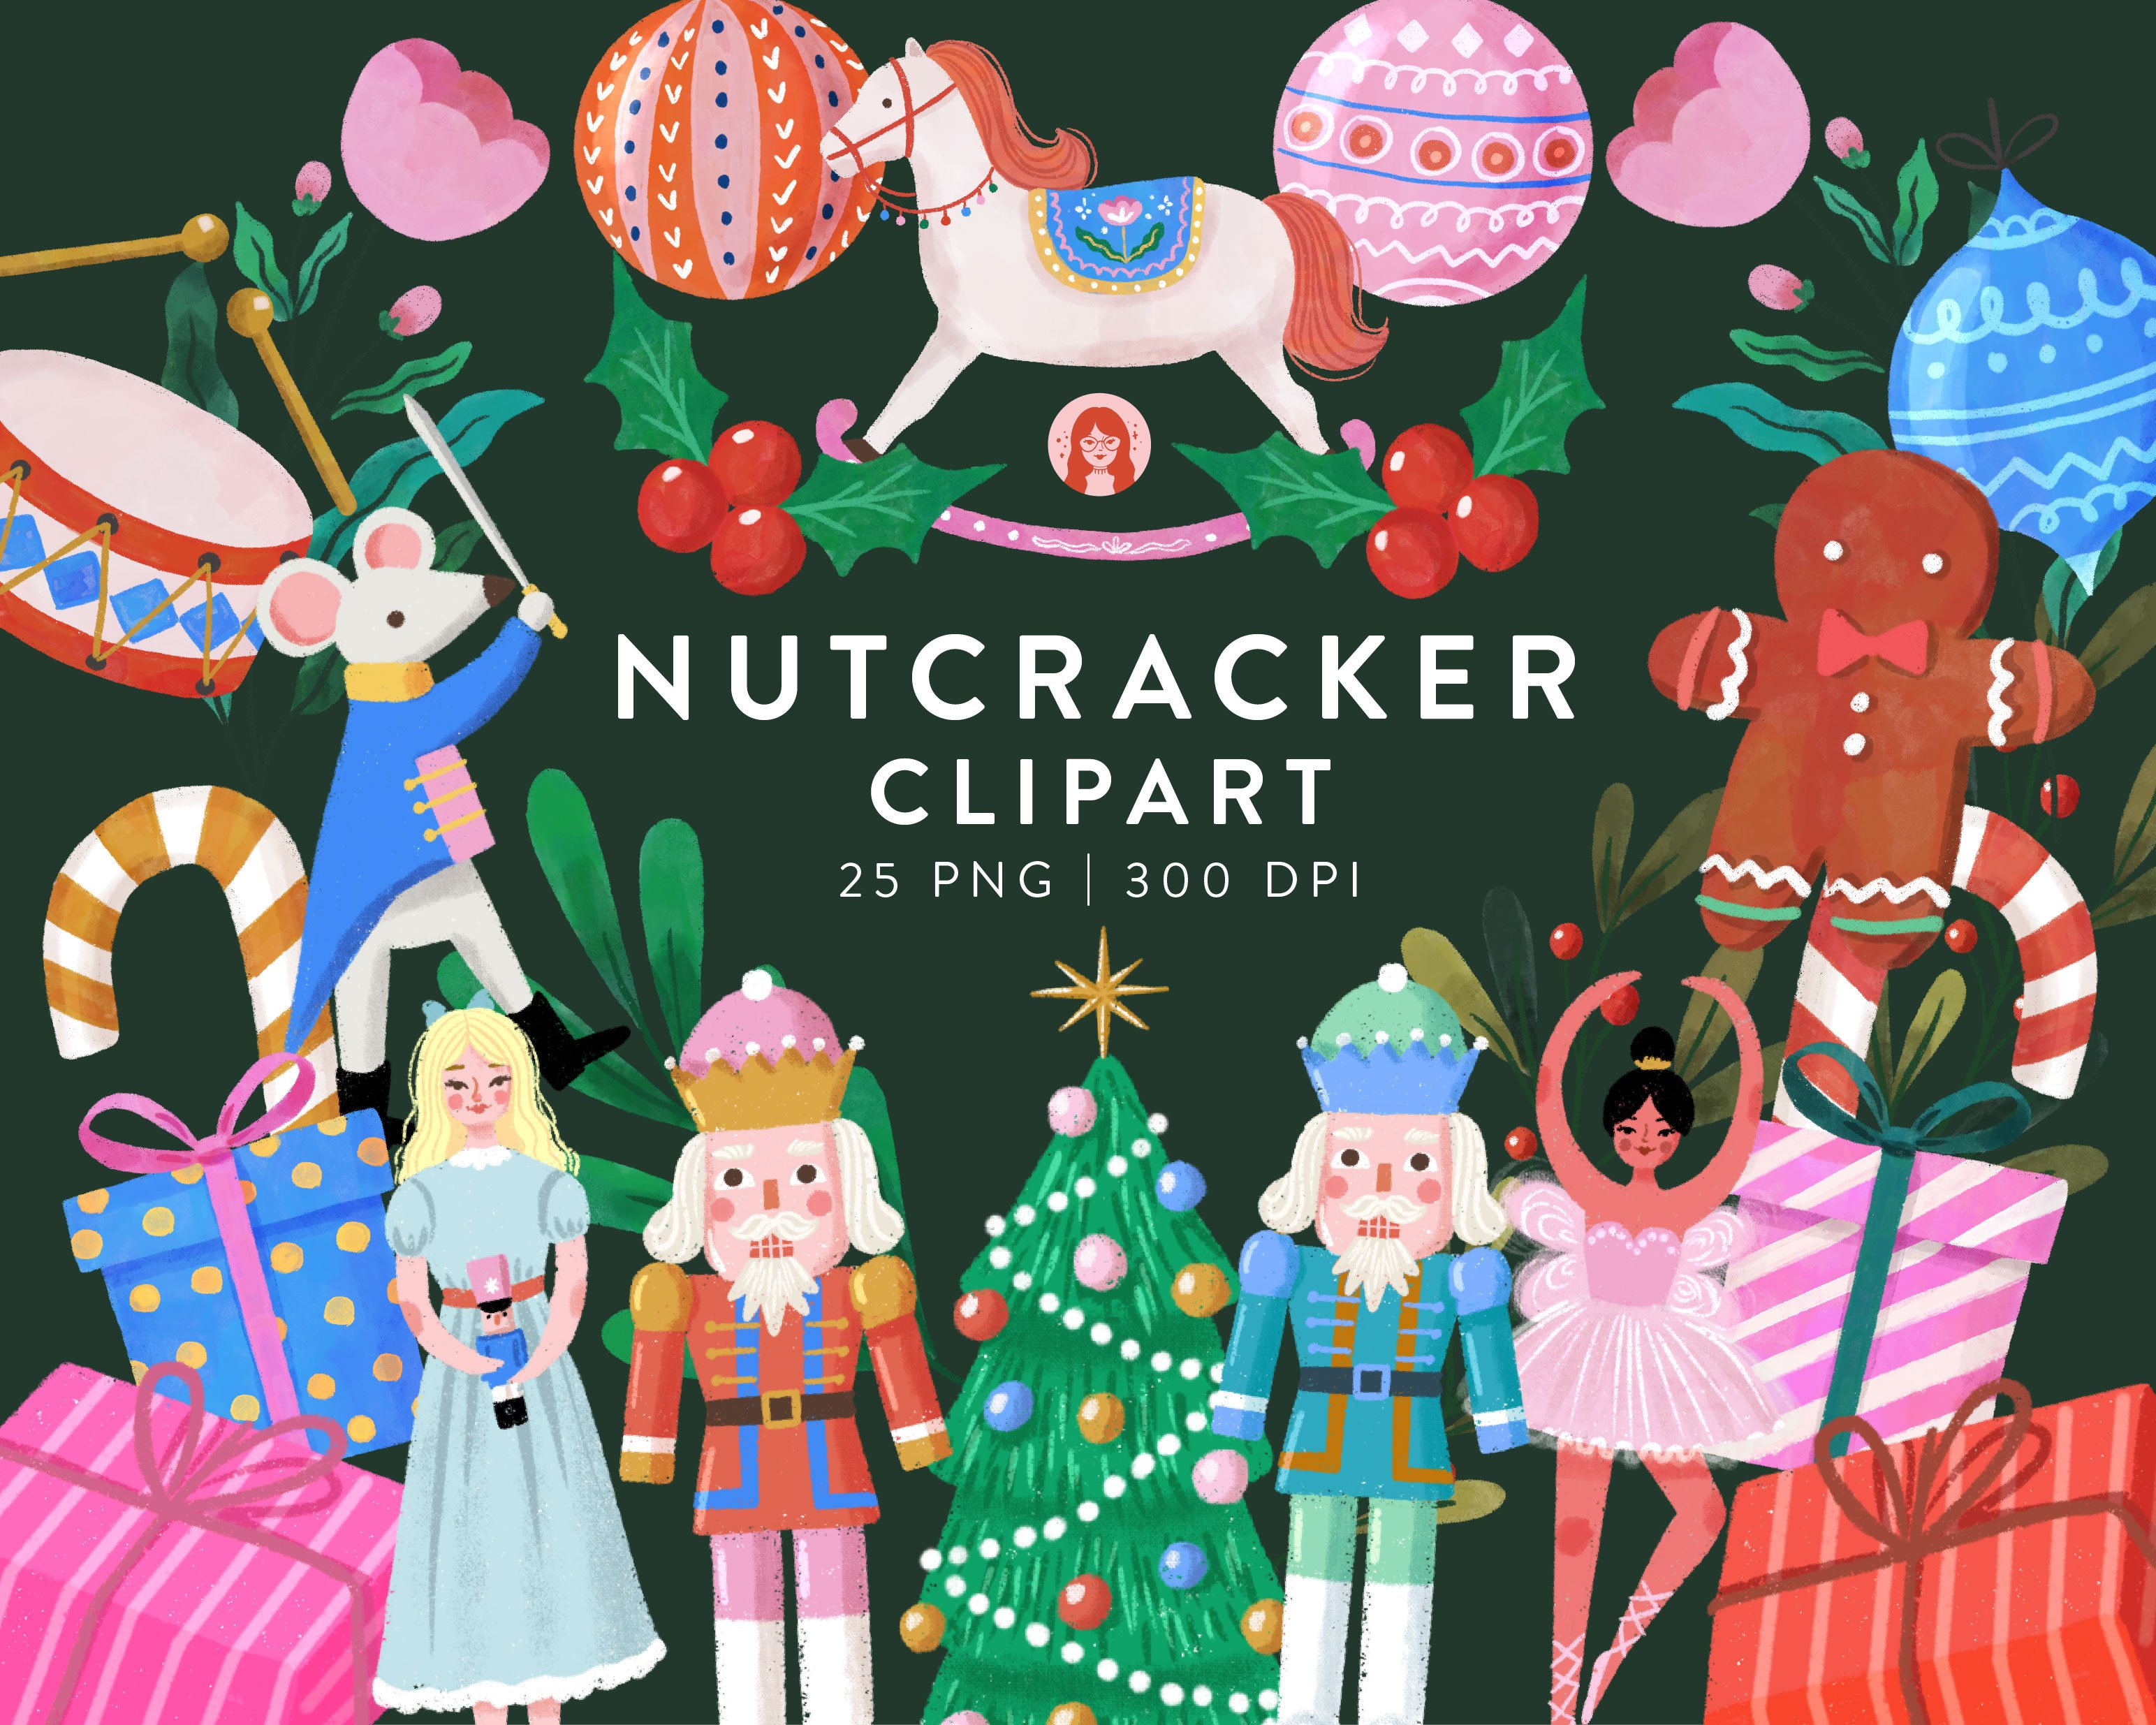 Nutcracker Christmas Watercolor Set cover image.